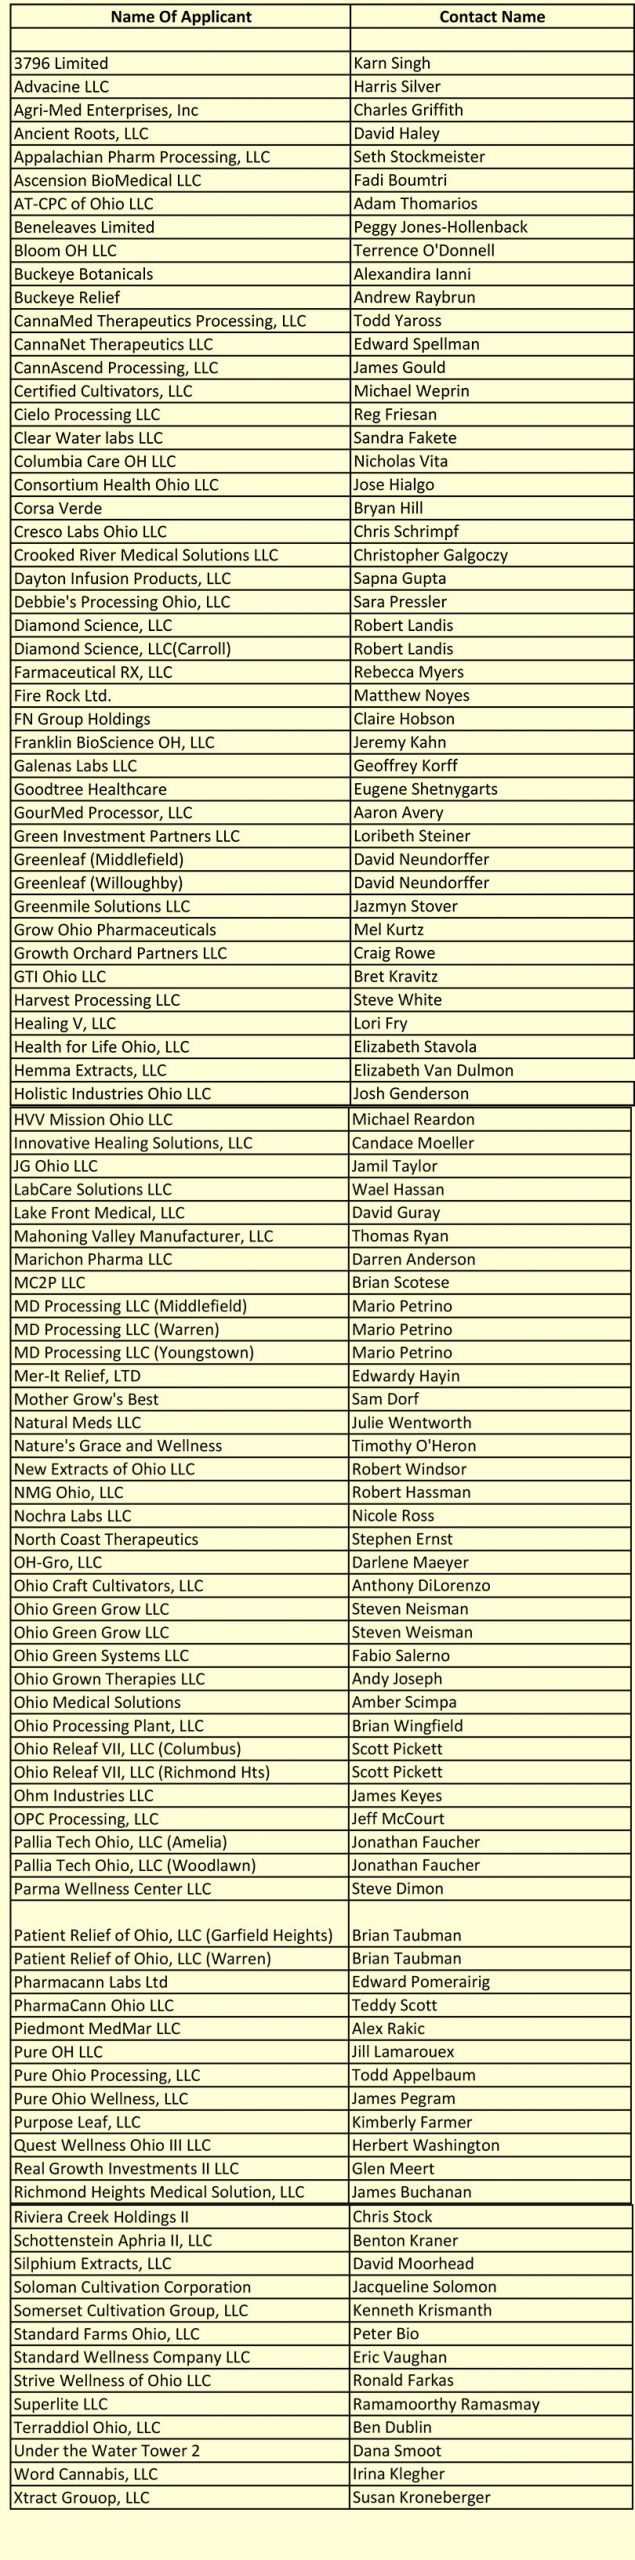 Ohio-Awarded 40 Companies